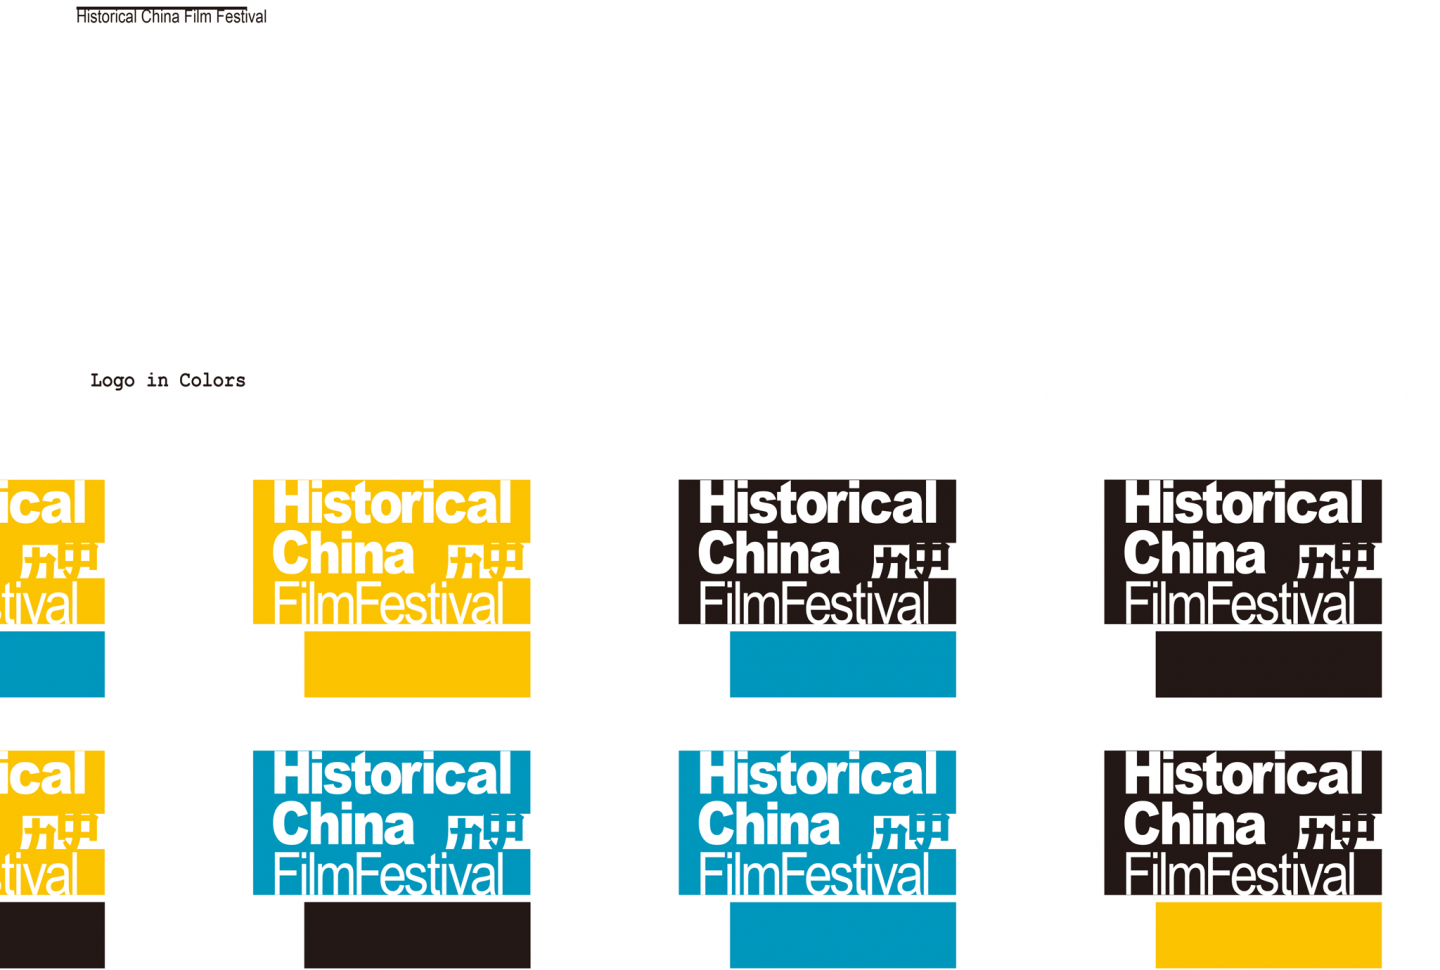 Historical China Film Festival